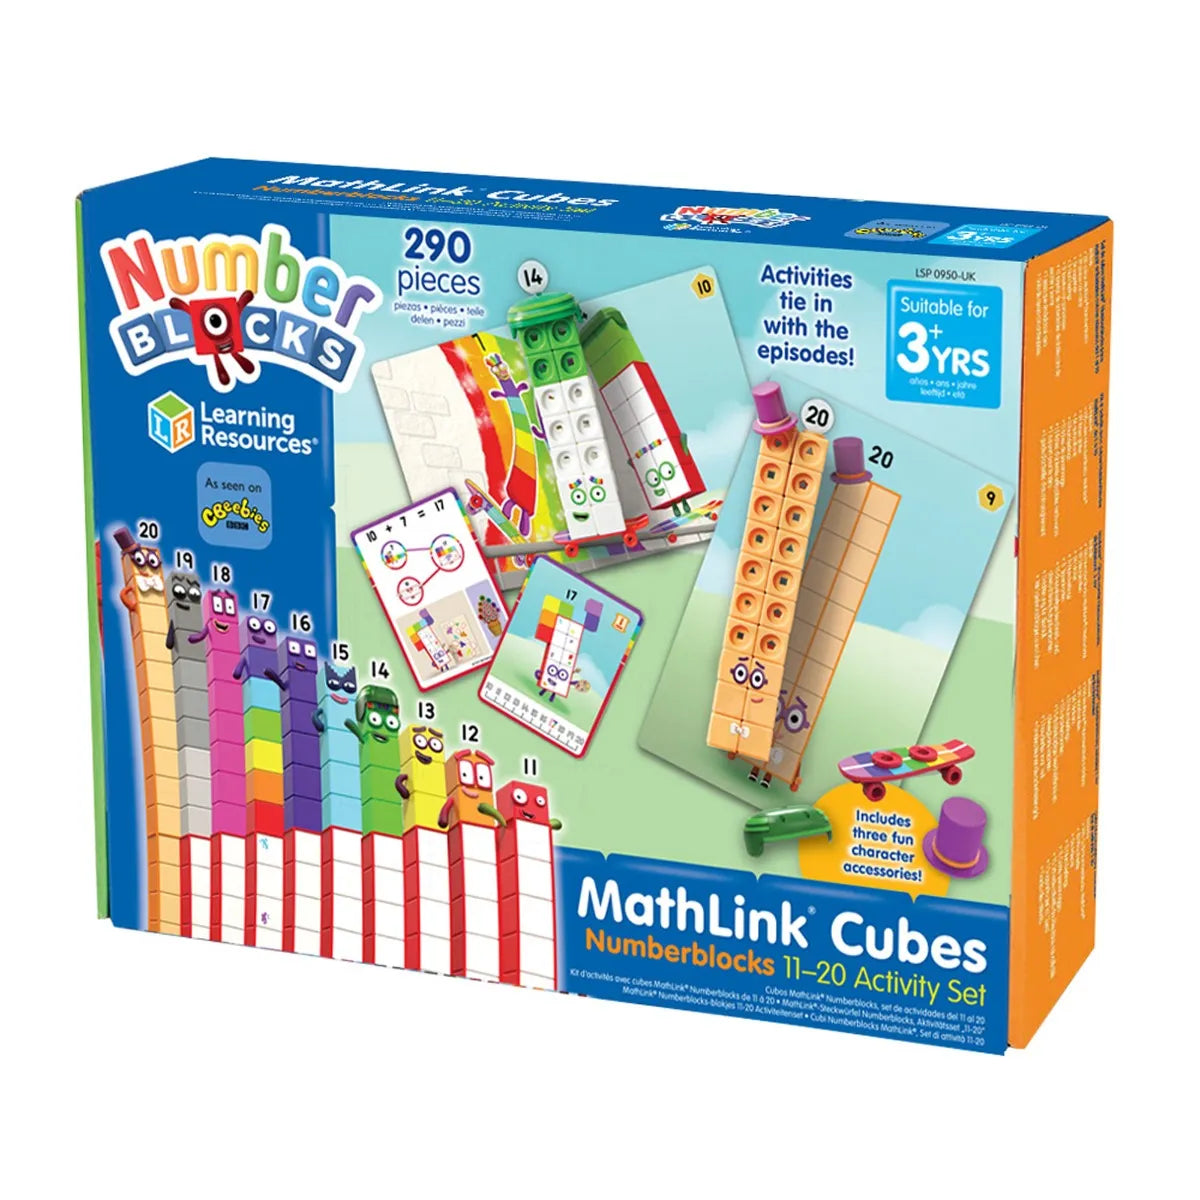 MathLink® Cubes Number Blocks 11-20 Activity Set